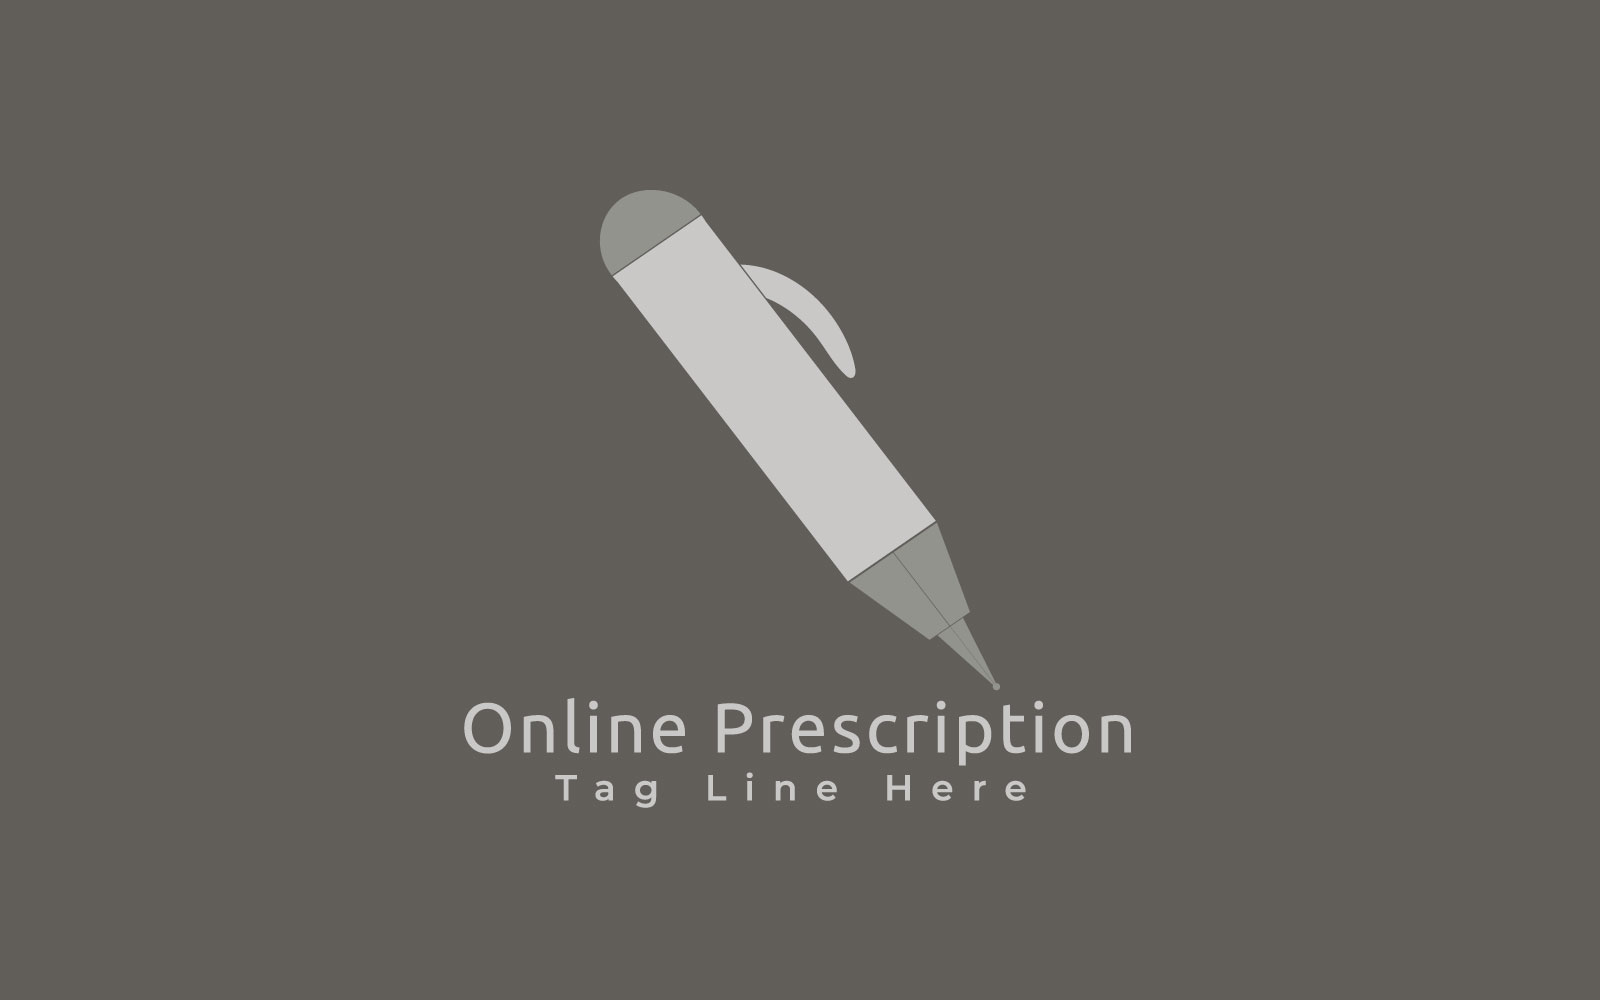 Online Prescription Logo Template